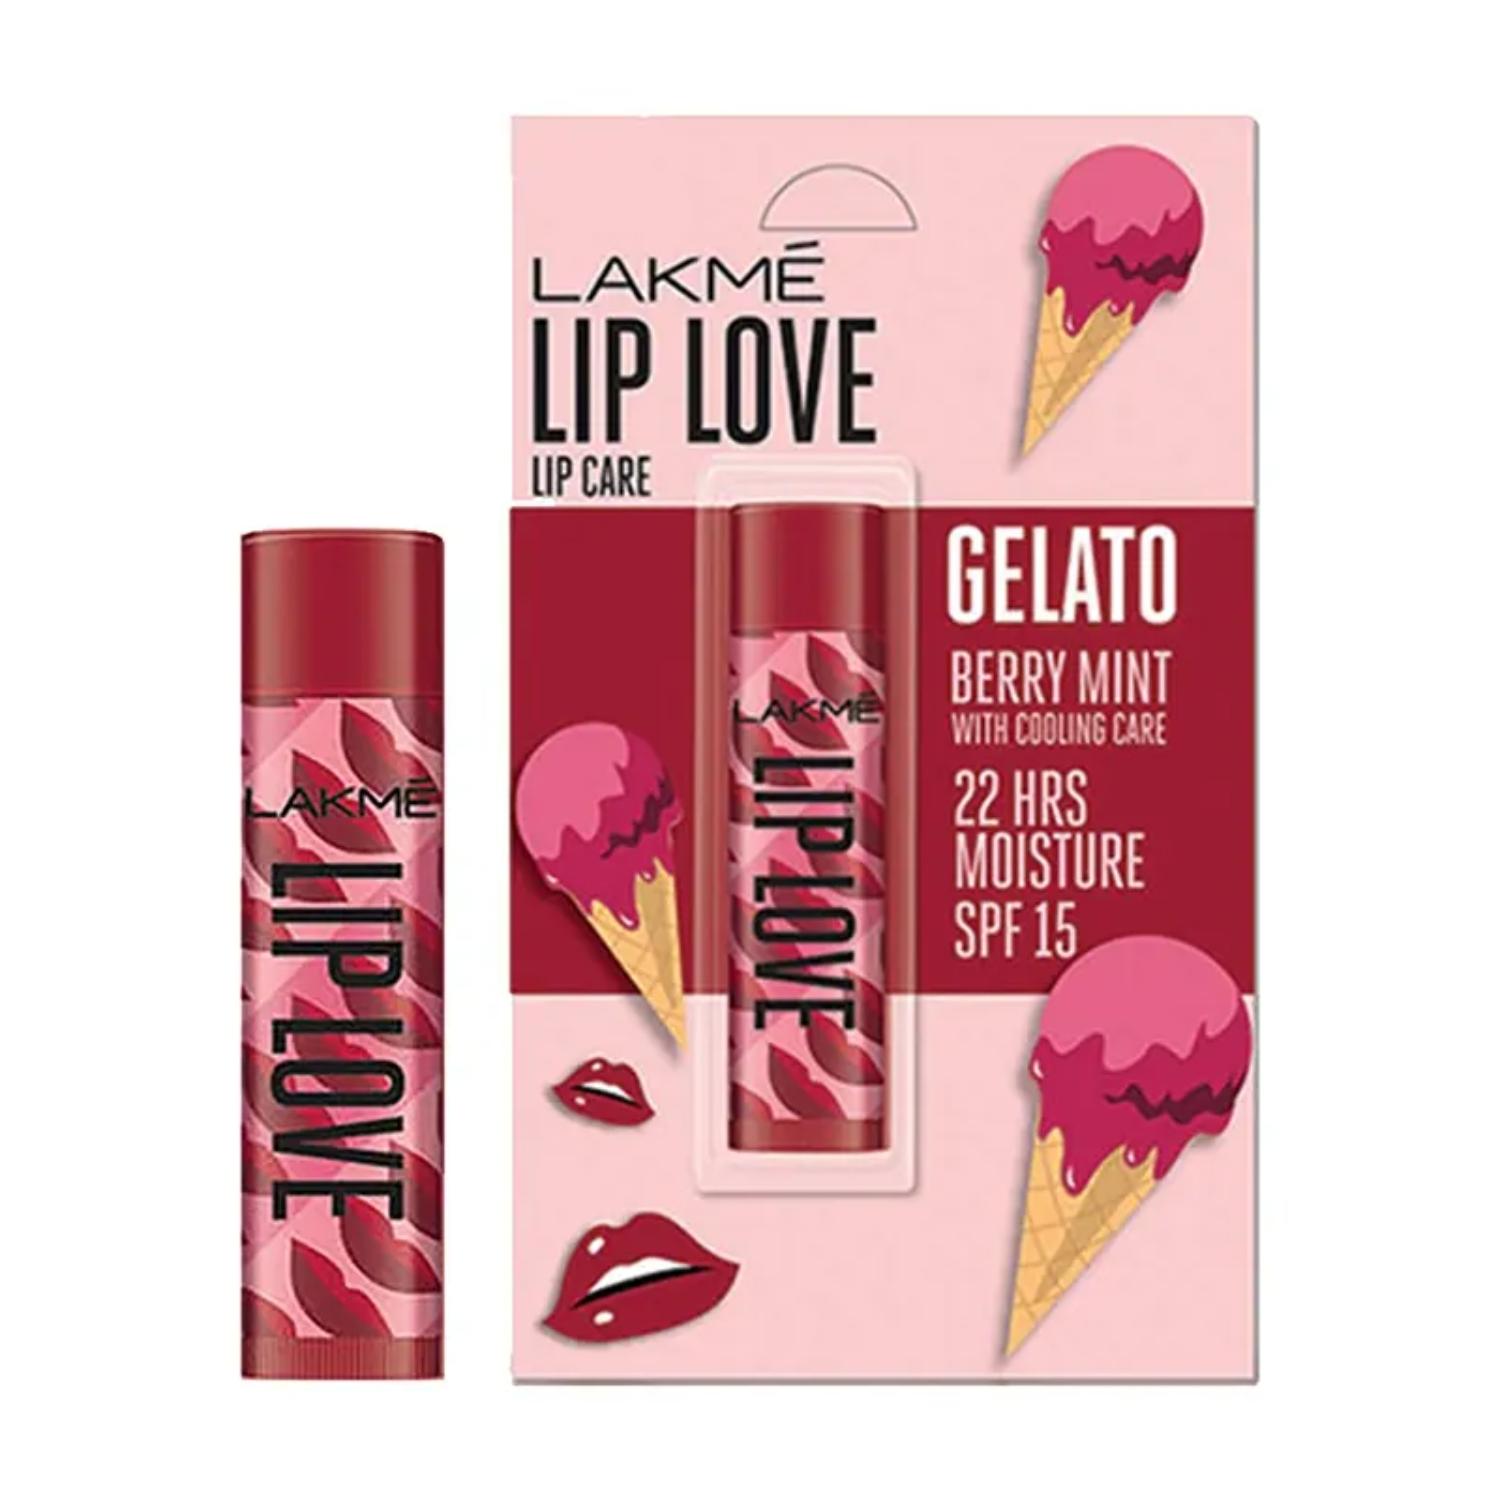 lakme lip love gelato chapstick lip balm - berry mint (4.5g)